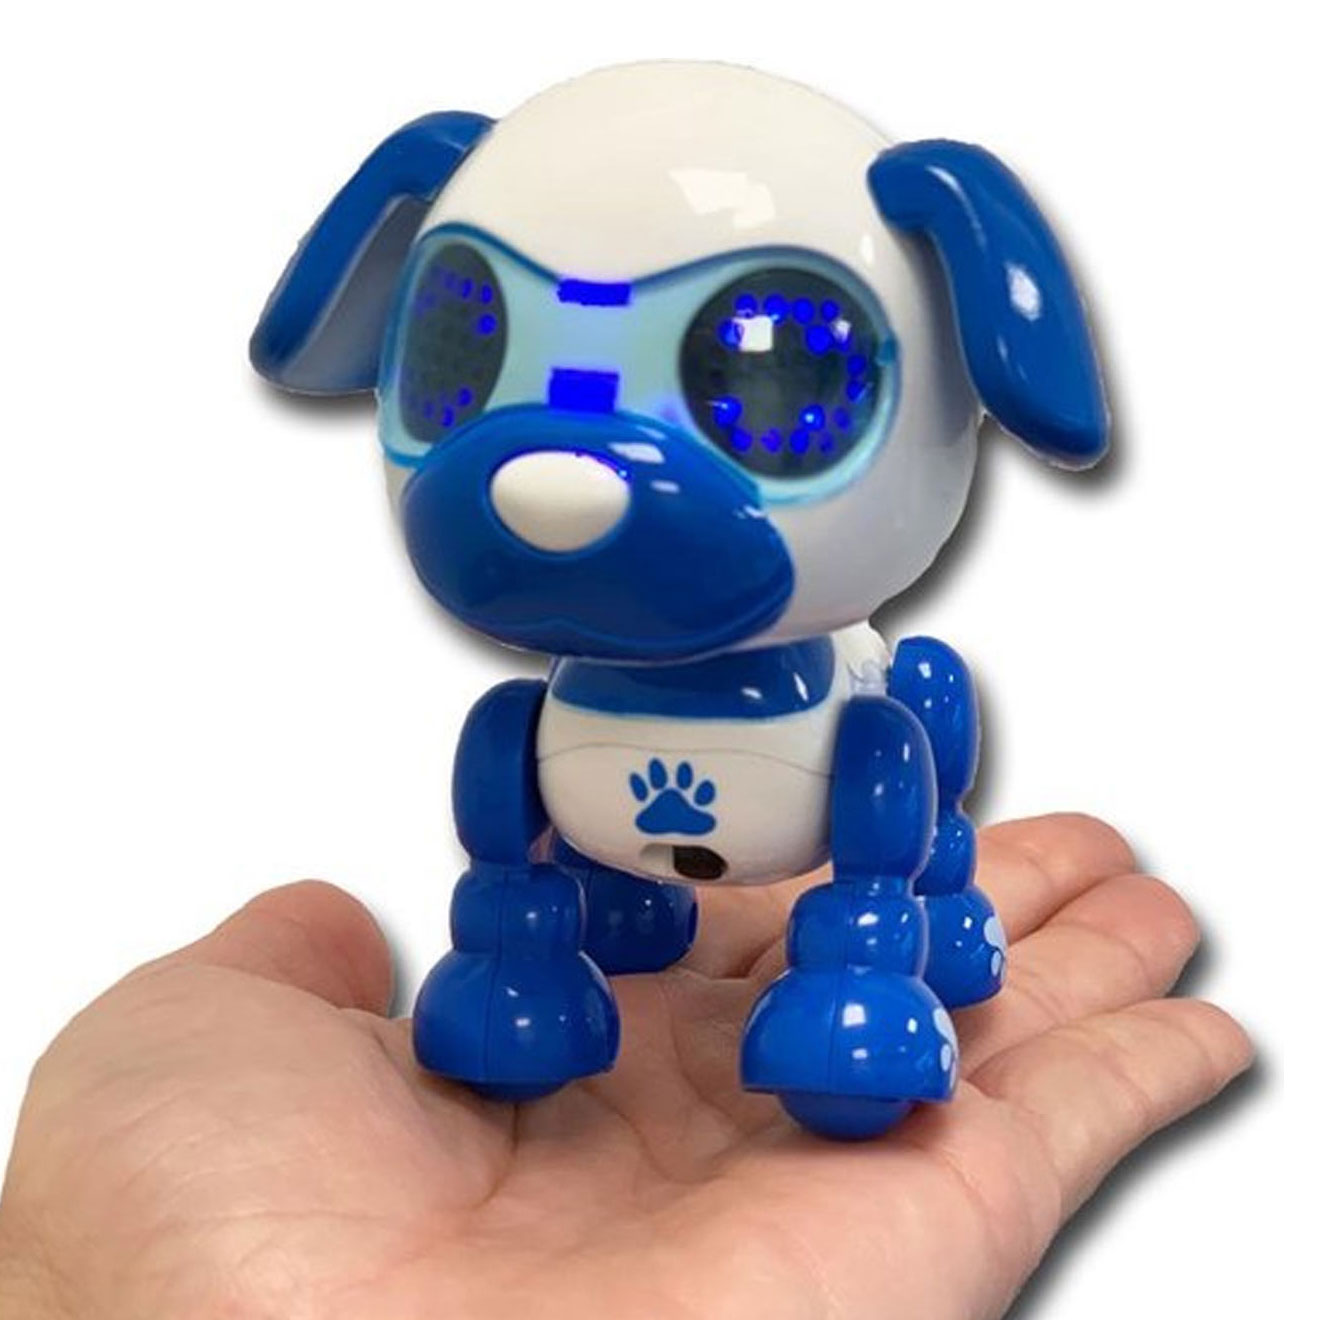 Gear2Play Robot chien jouet interactif télécommandé Robo Max